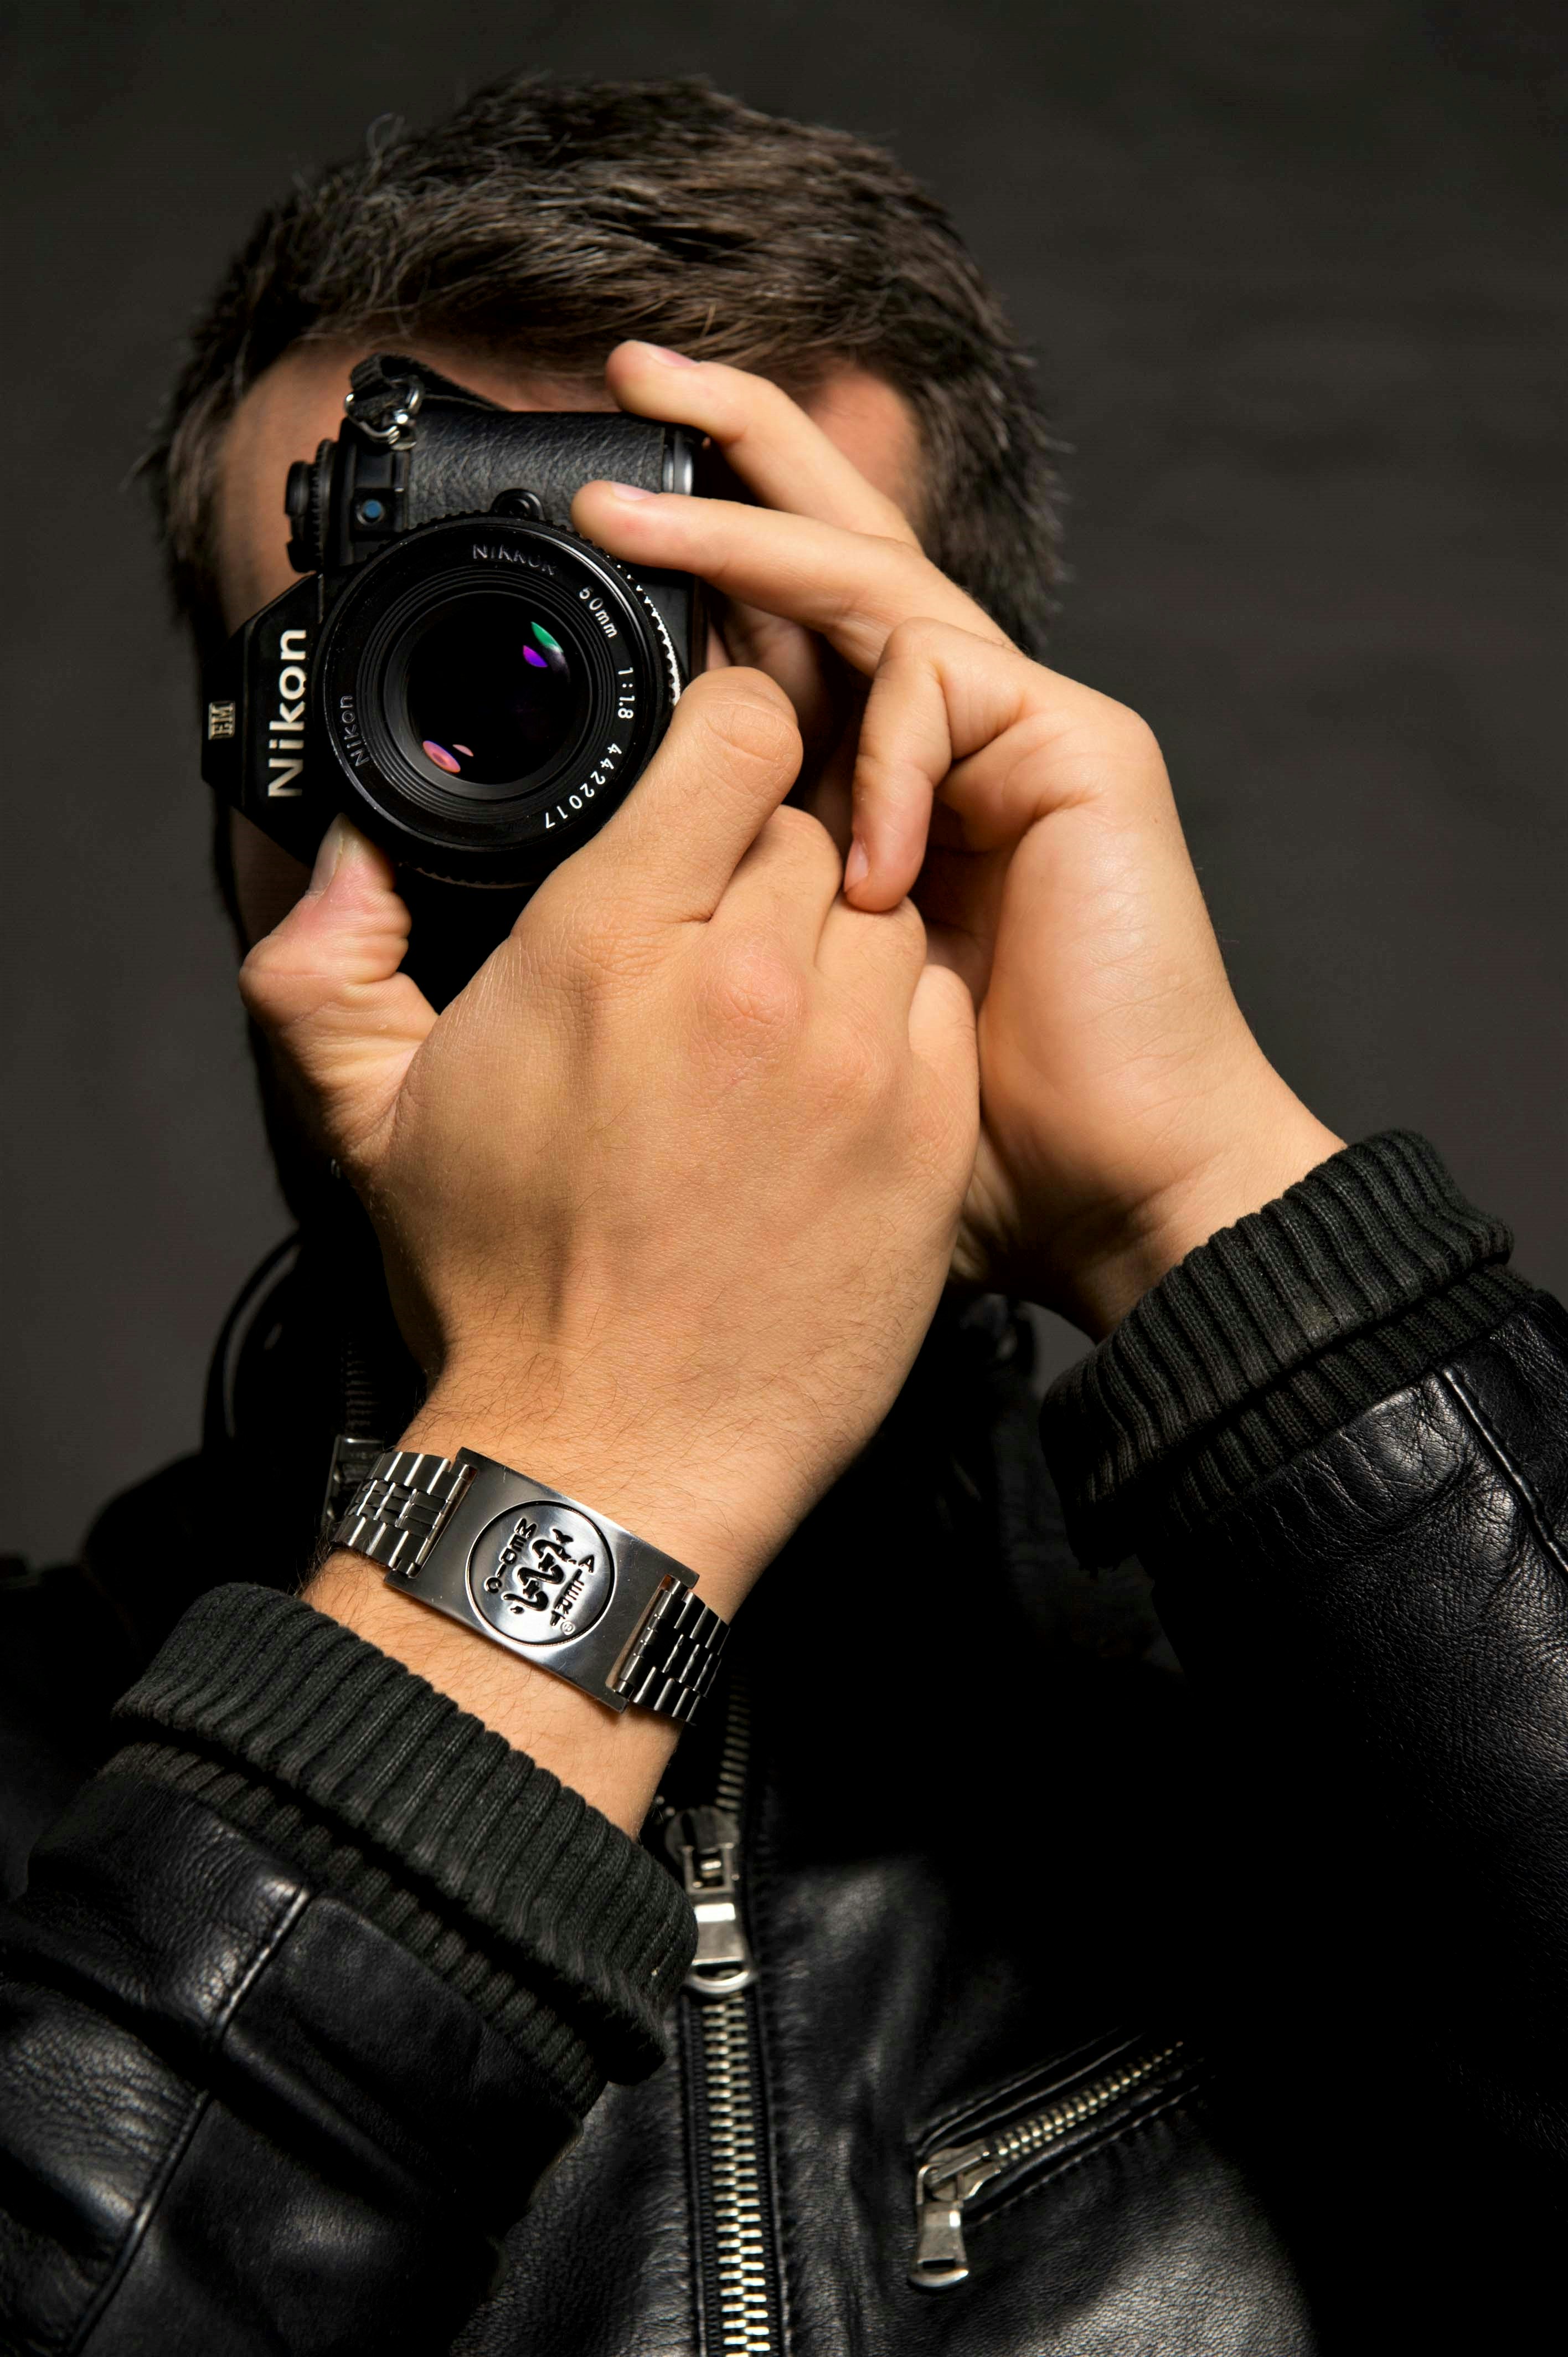 A man takes a self portrait with a nikon camerawhile wearing a MedicAlert bracelet.